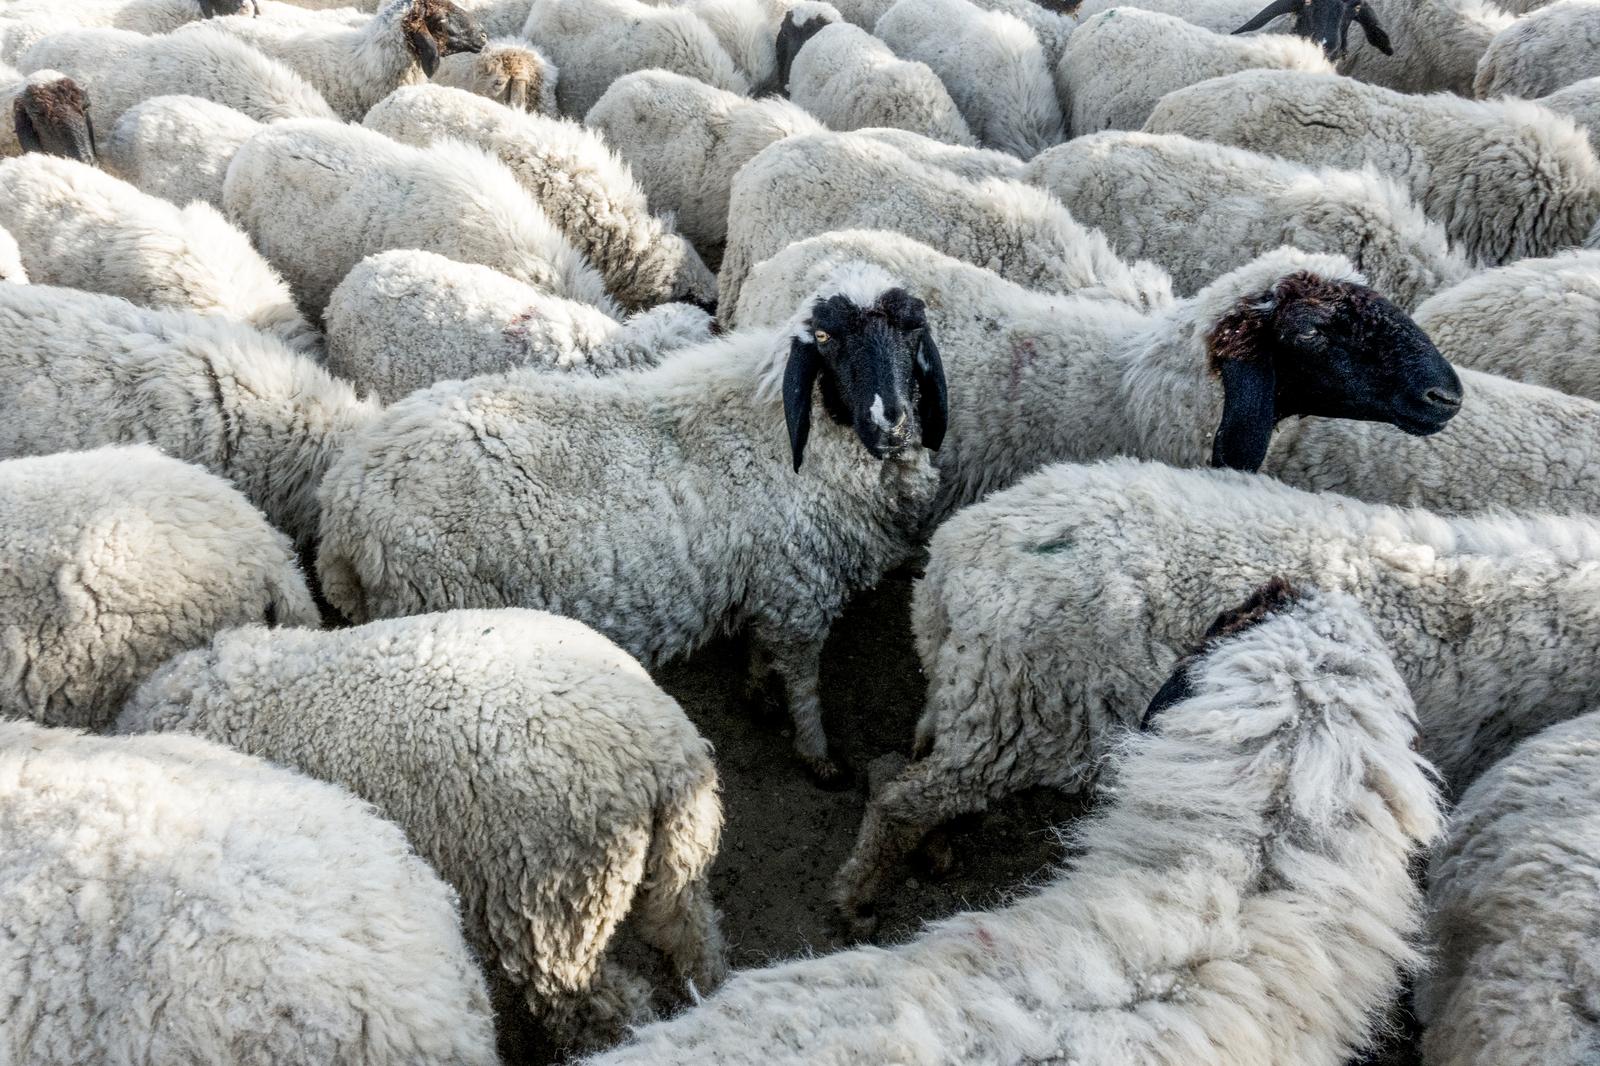 Raising of sheep and goats in Ida-Viru county